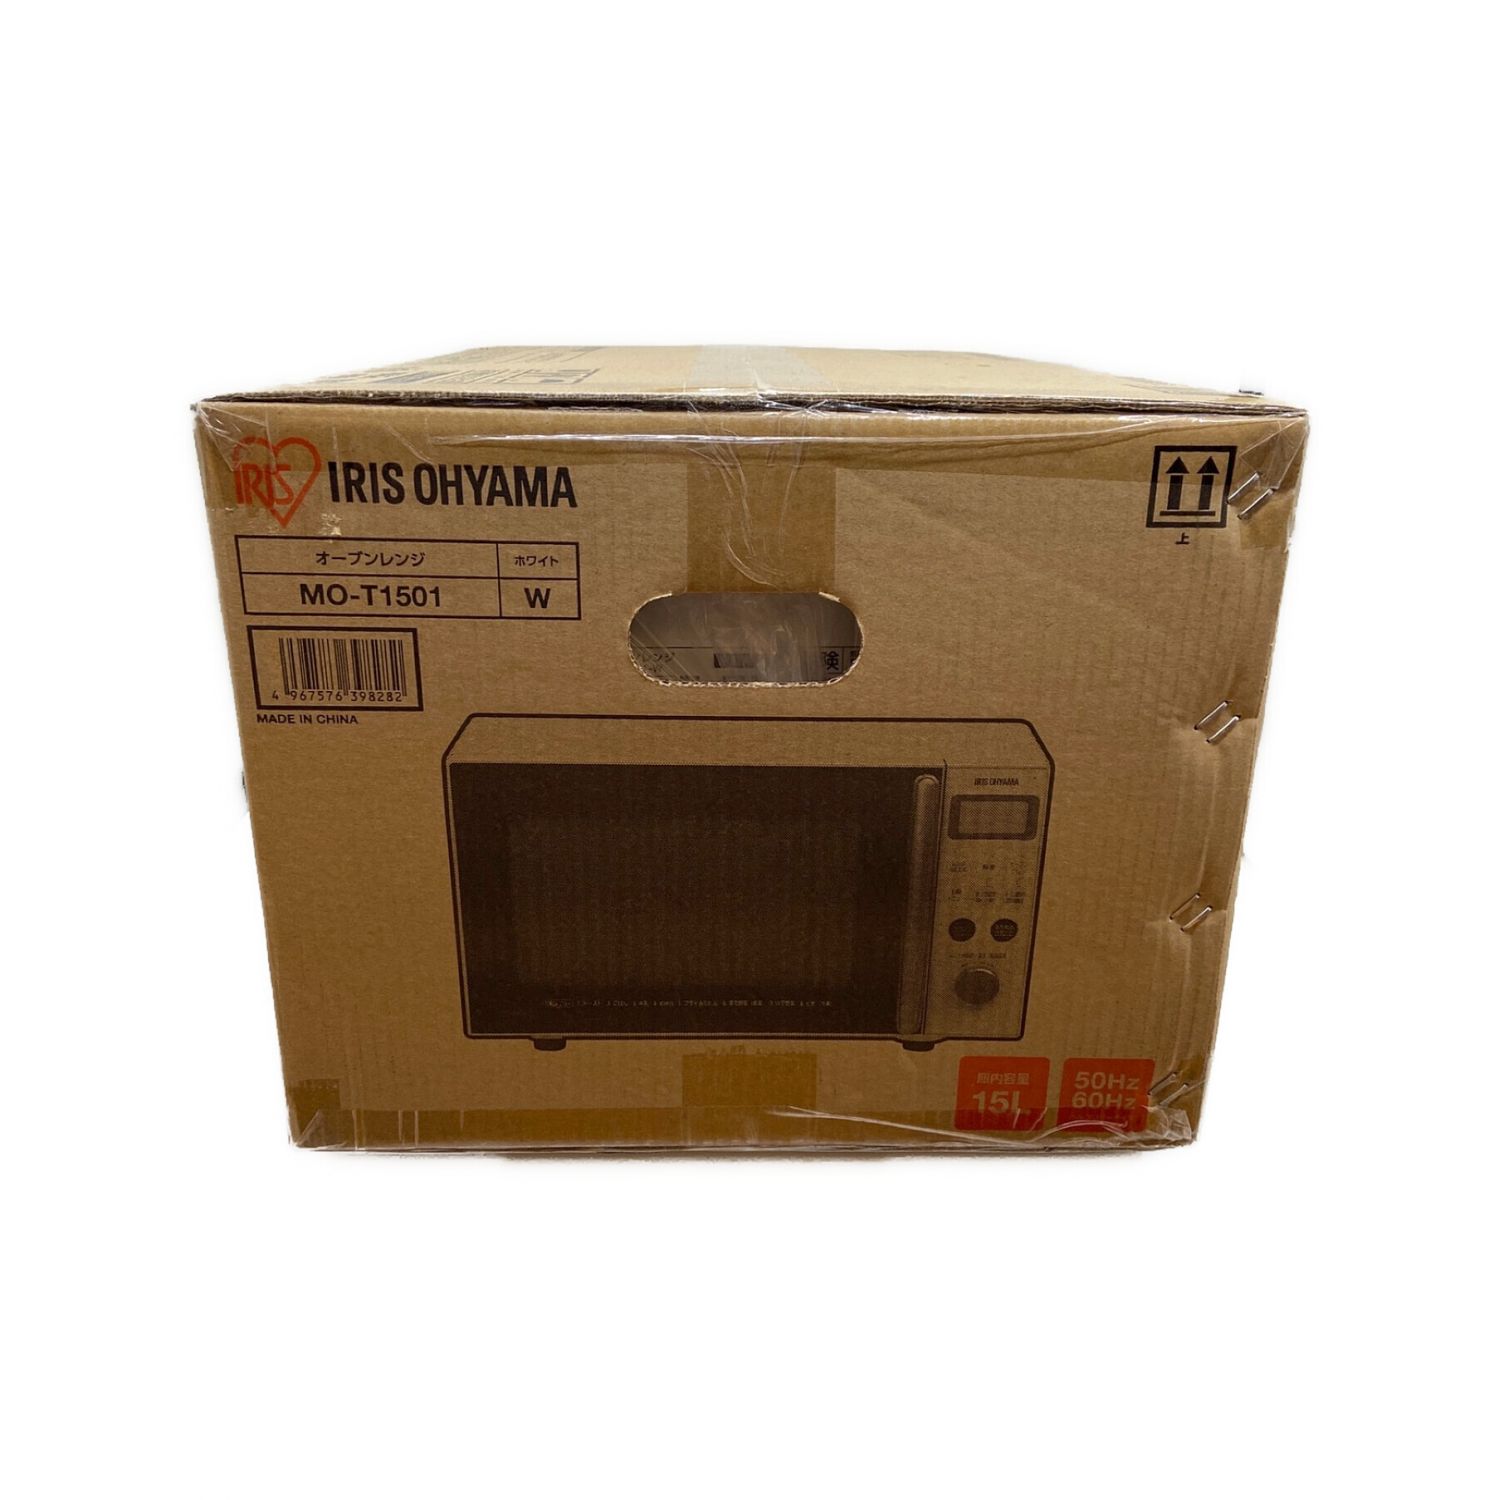 IRIS OHYAMA (アイリスオーヤマ) オーブンレンジ MO-T1501-W 程度S(未